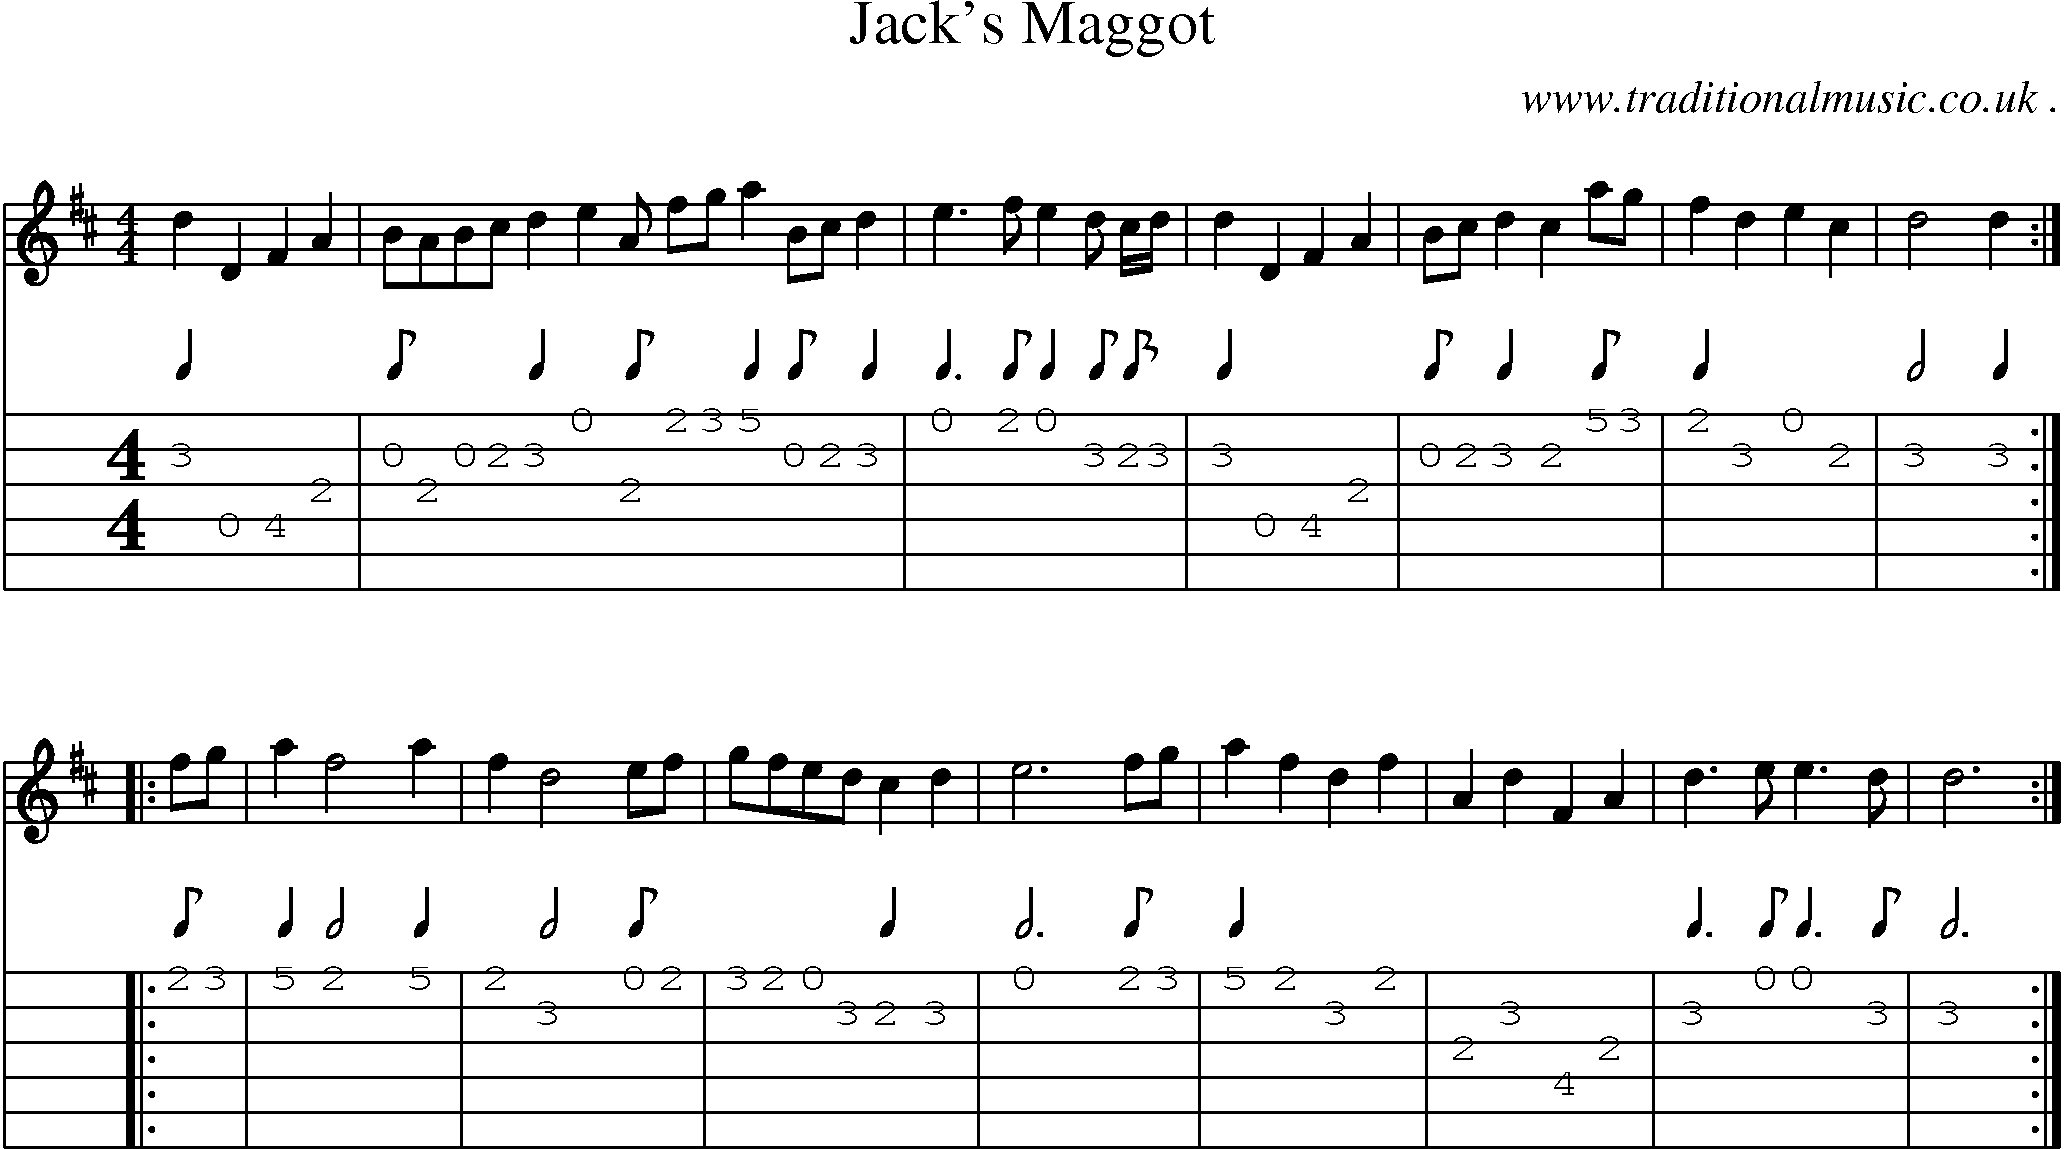 Sheet-Music and Guitar Tabs for Jacks Maggot